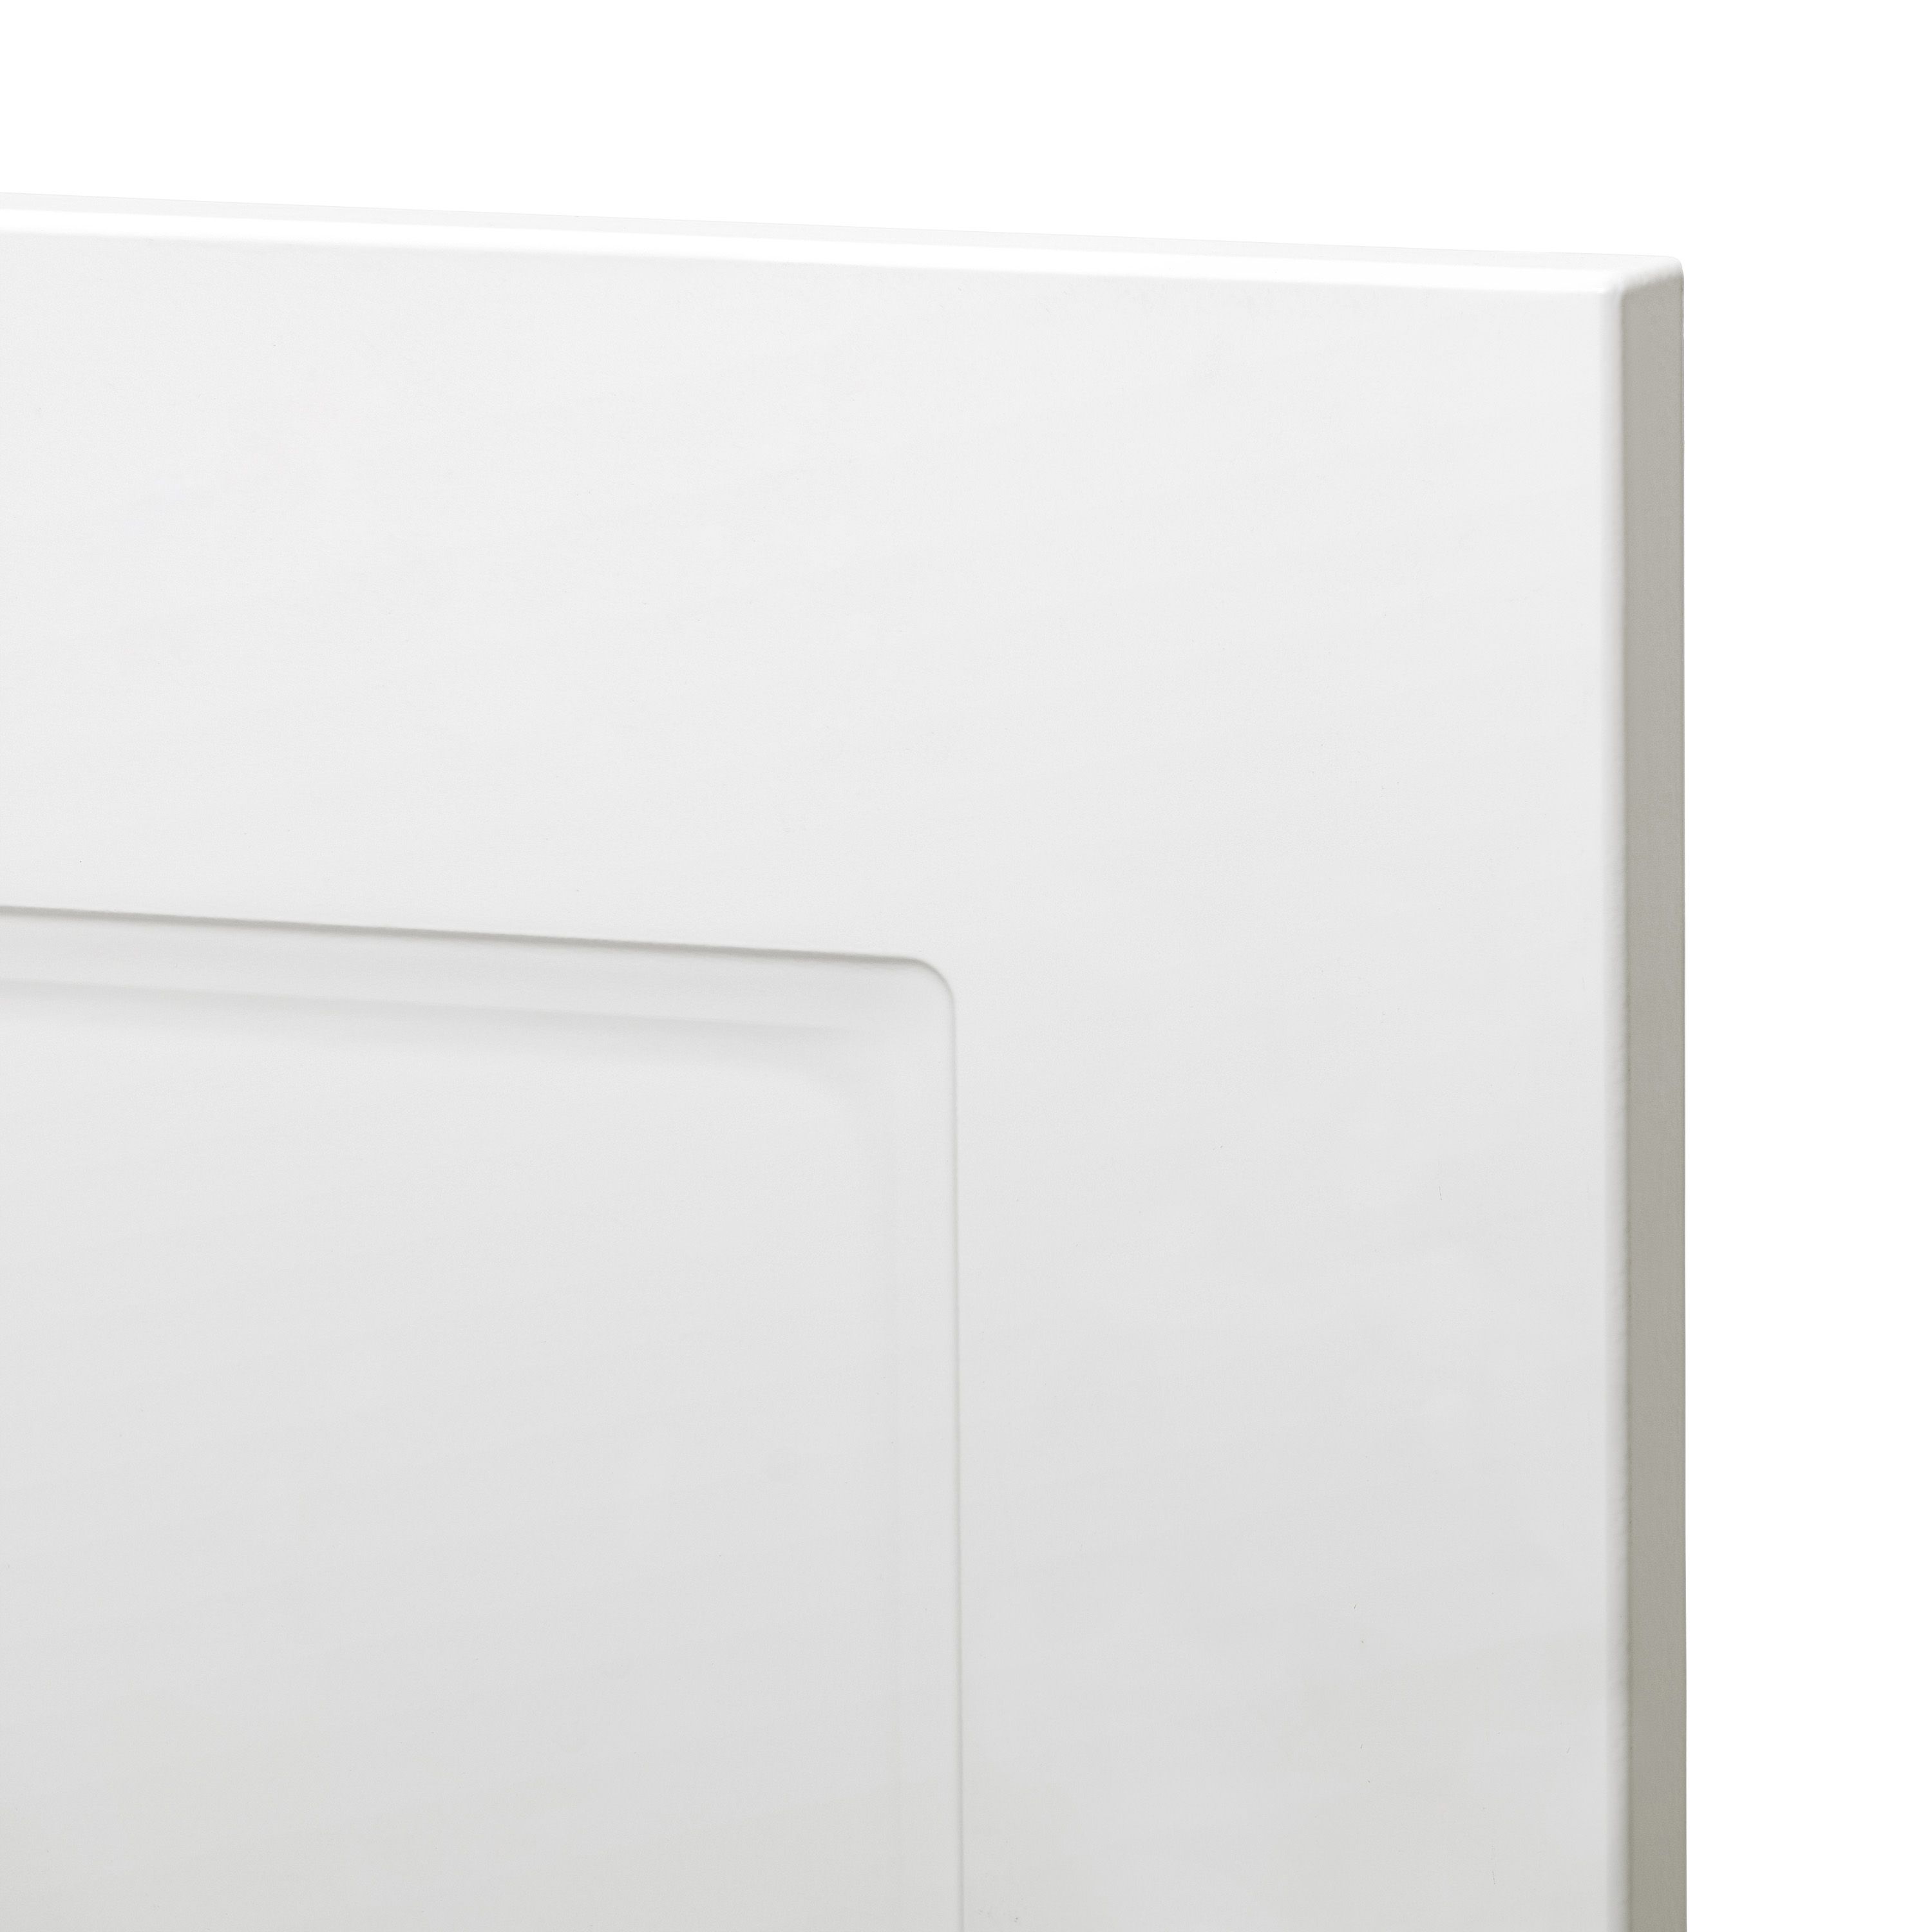 GoodHome Artemisia Matt white classic shaker Highline Cabinet door (W)500mm (H)715mm (T)18mm